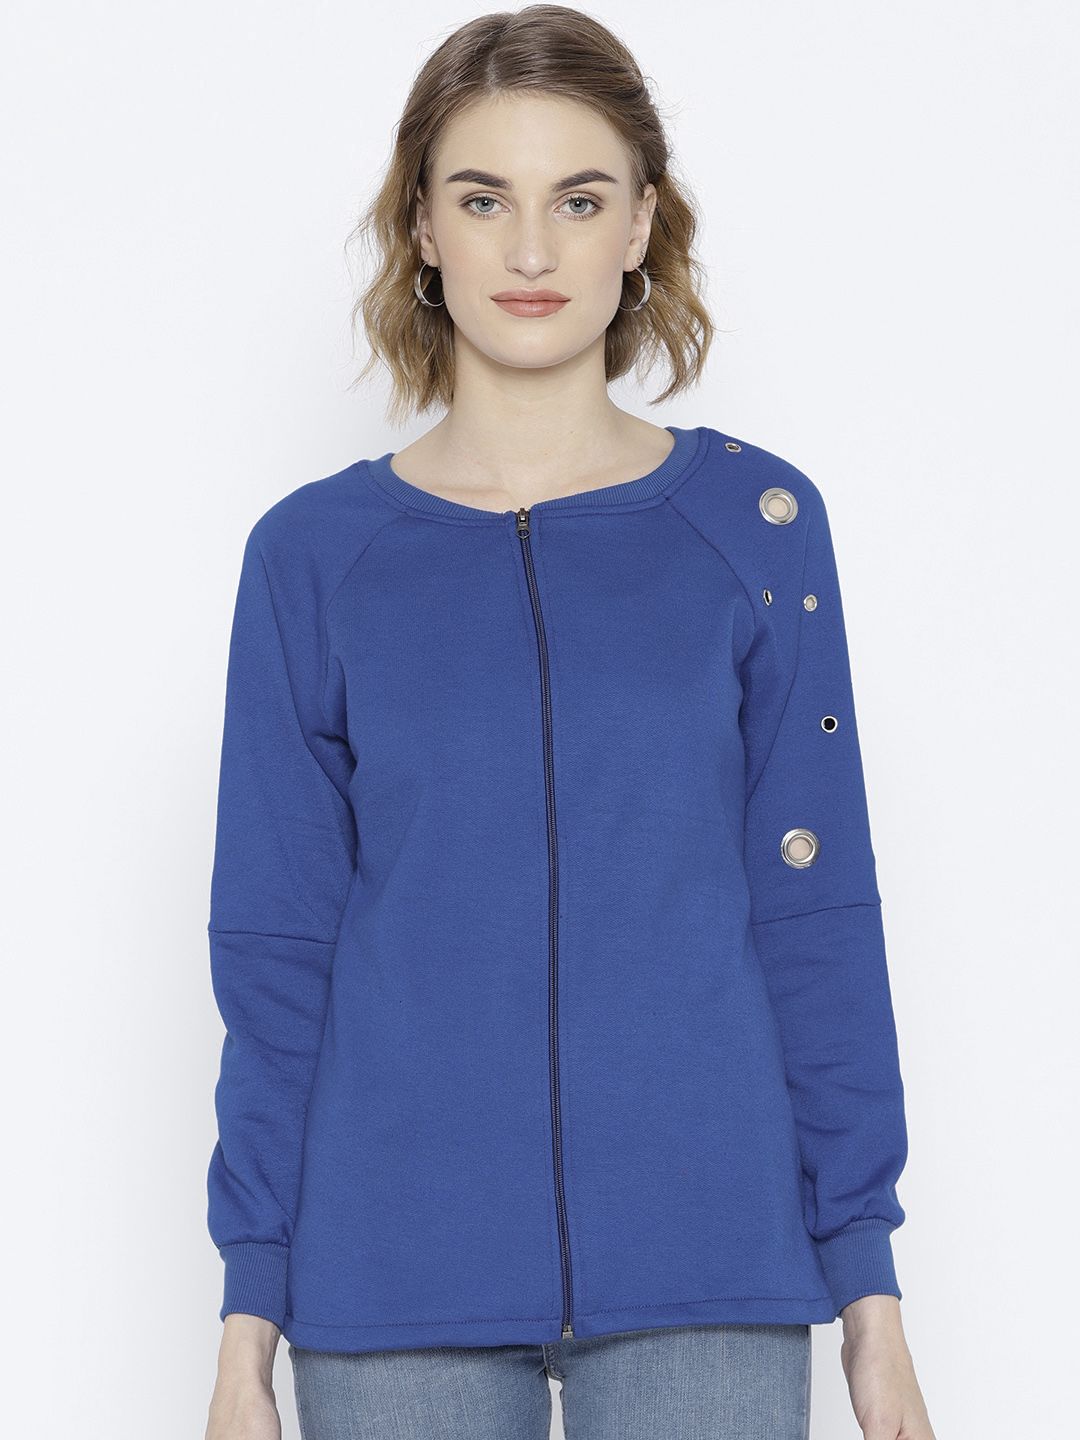 Belle Fille Women Blue Solid Sweatshirt Price in India